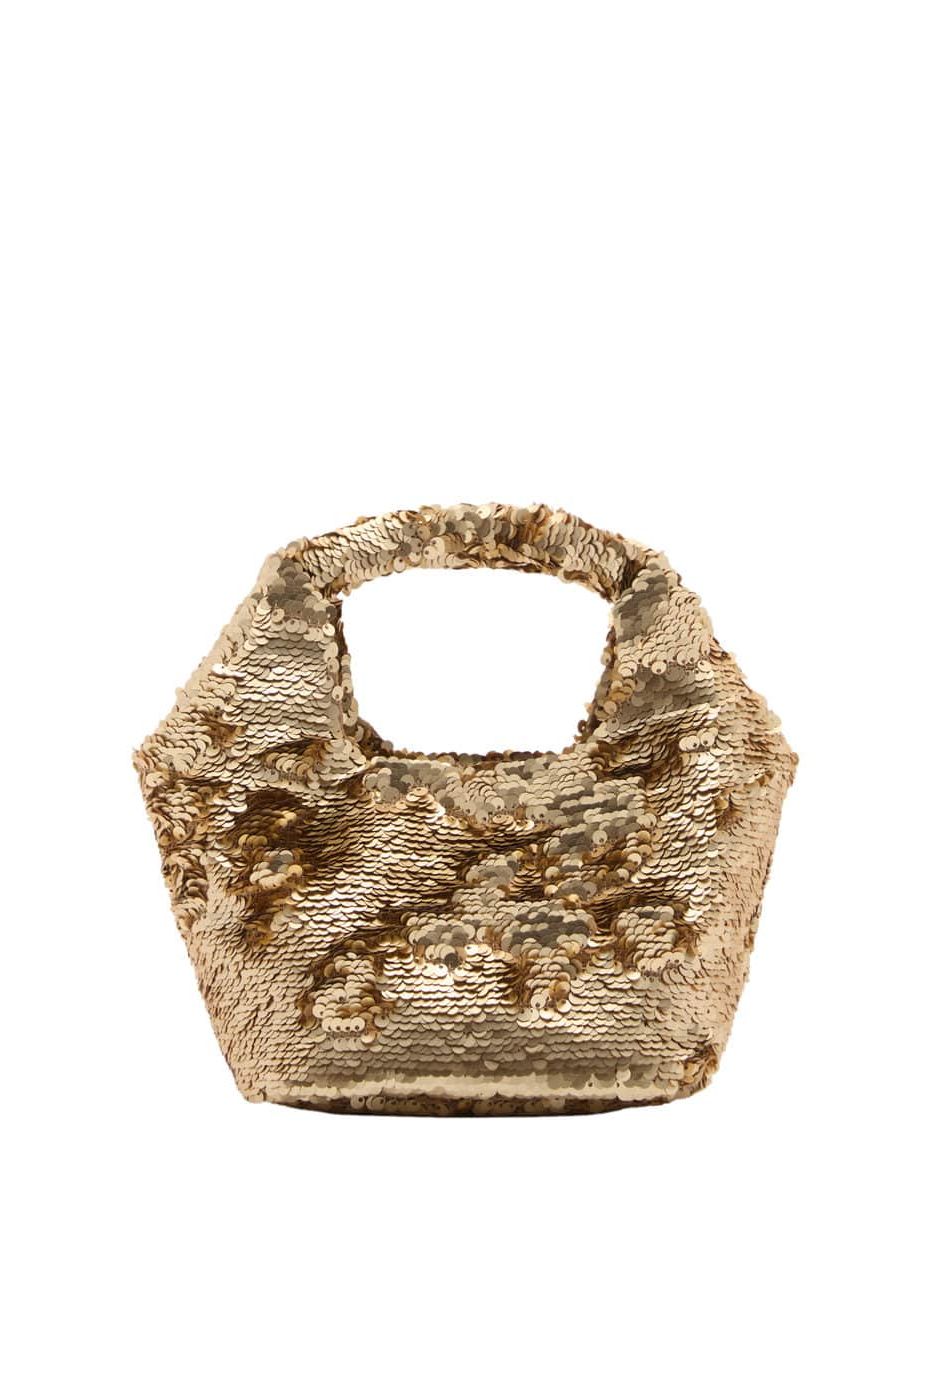 MANGO - Sequin handbag gold - One size - Women